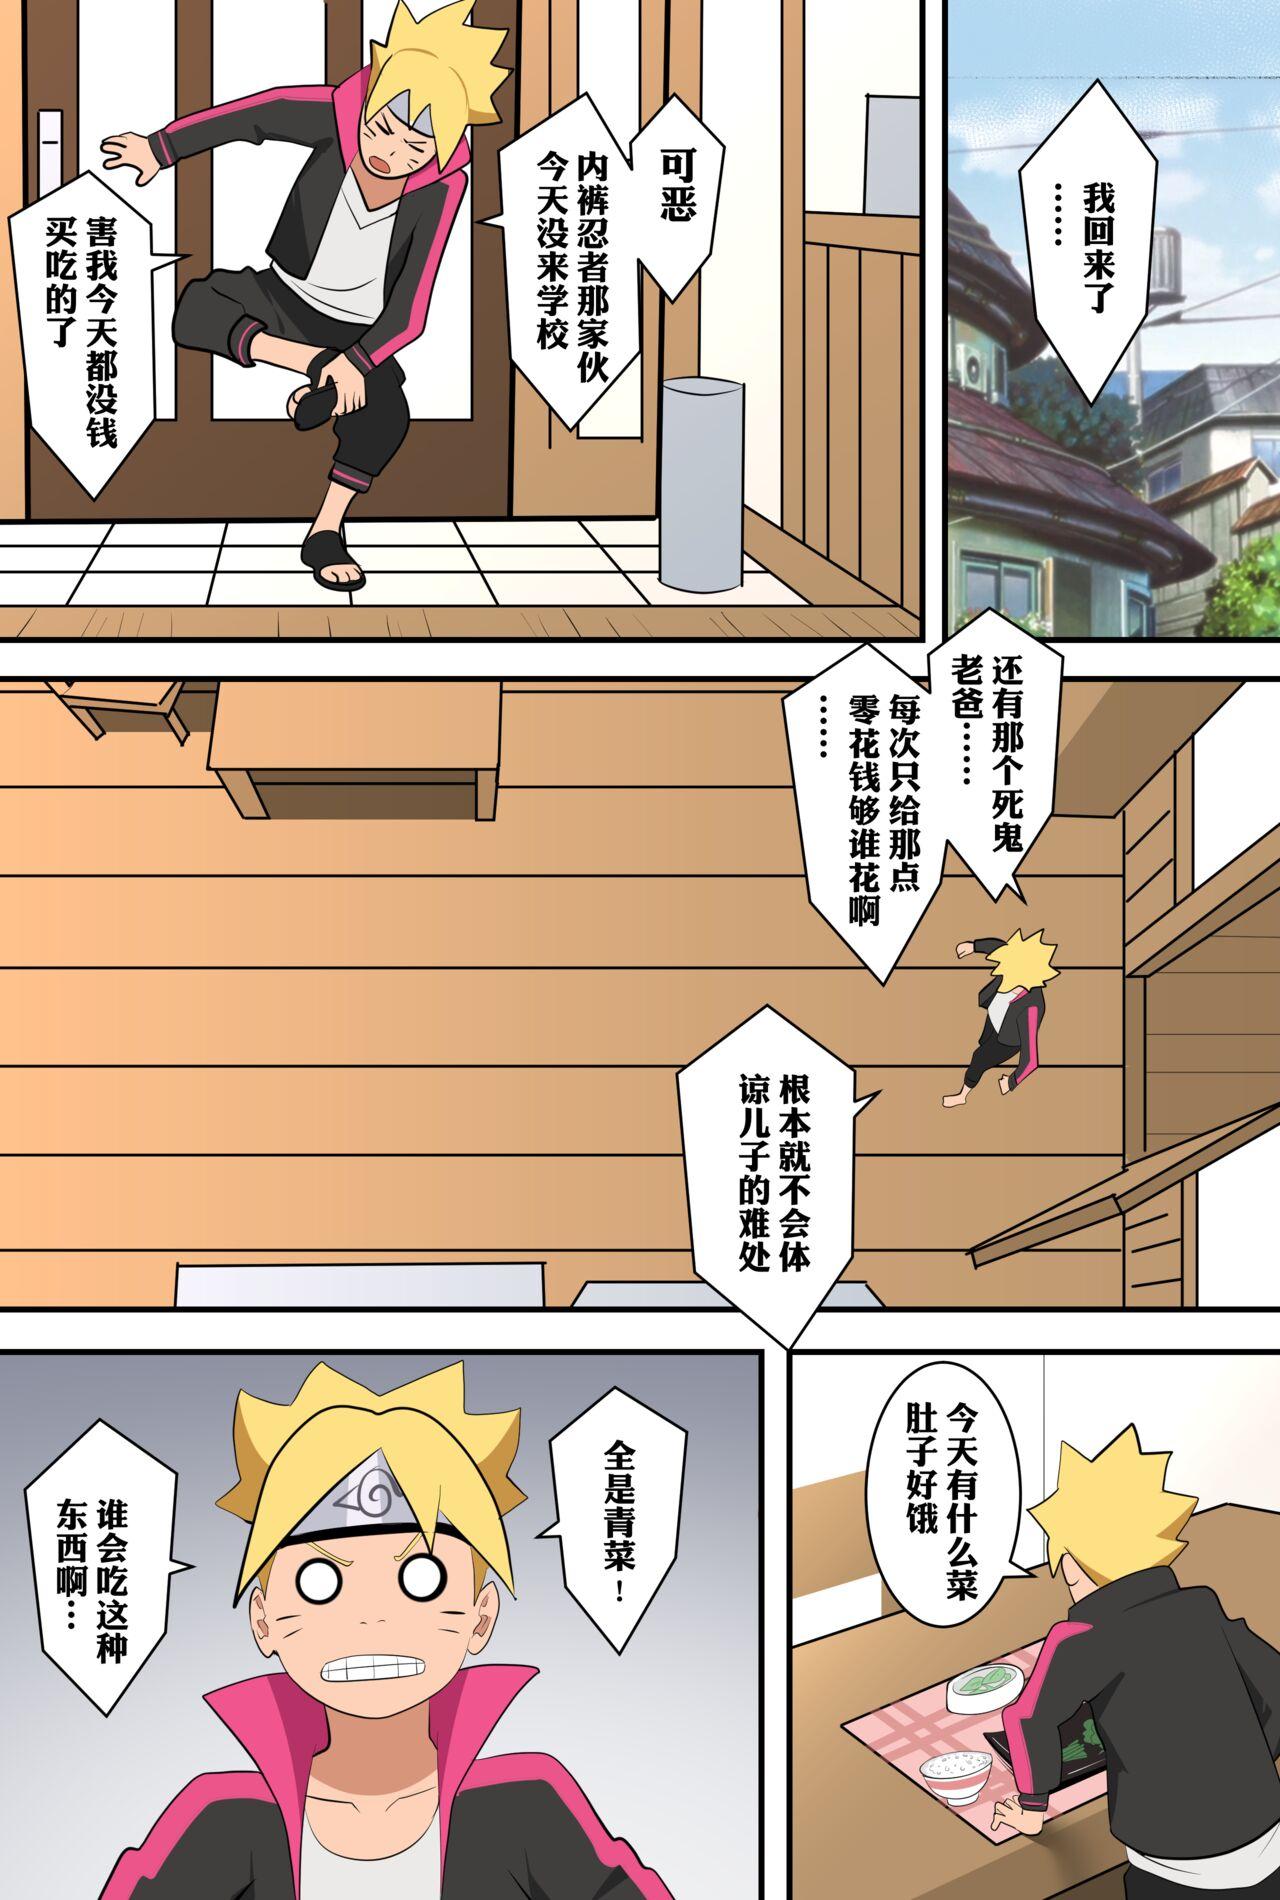 Gostoso 附身忍者的复仇 - Naruto Periscope - Page 7